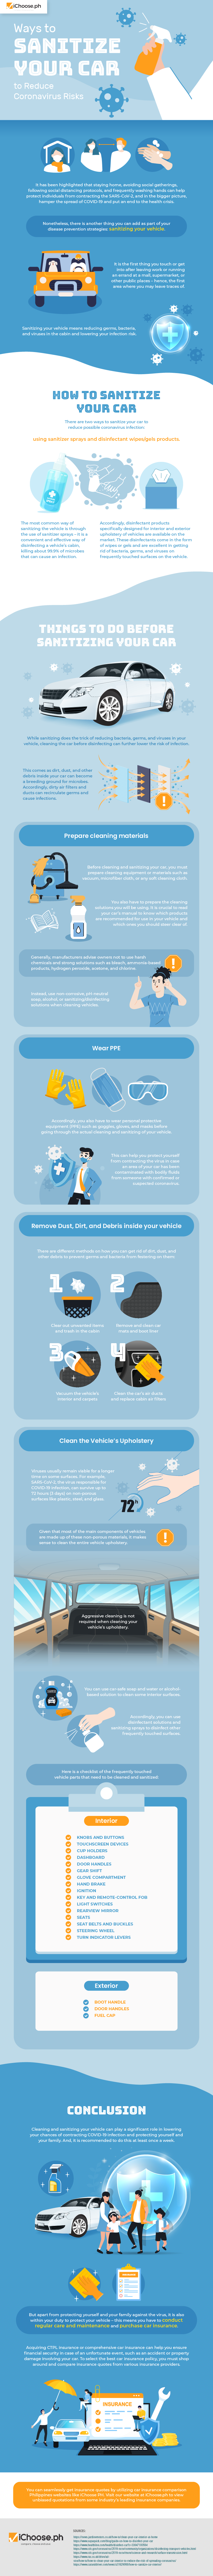 Ways-to-Sanitize-Sanitizing-Your-Car-to-Reduce-Coronavirus-Risks-car-insurance-philippines-infographic